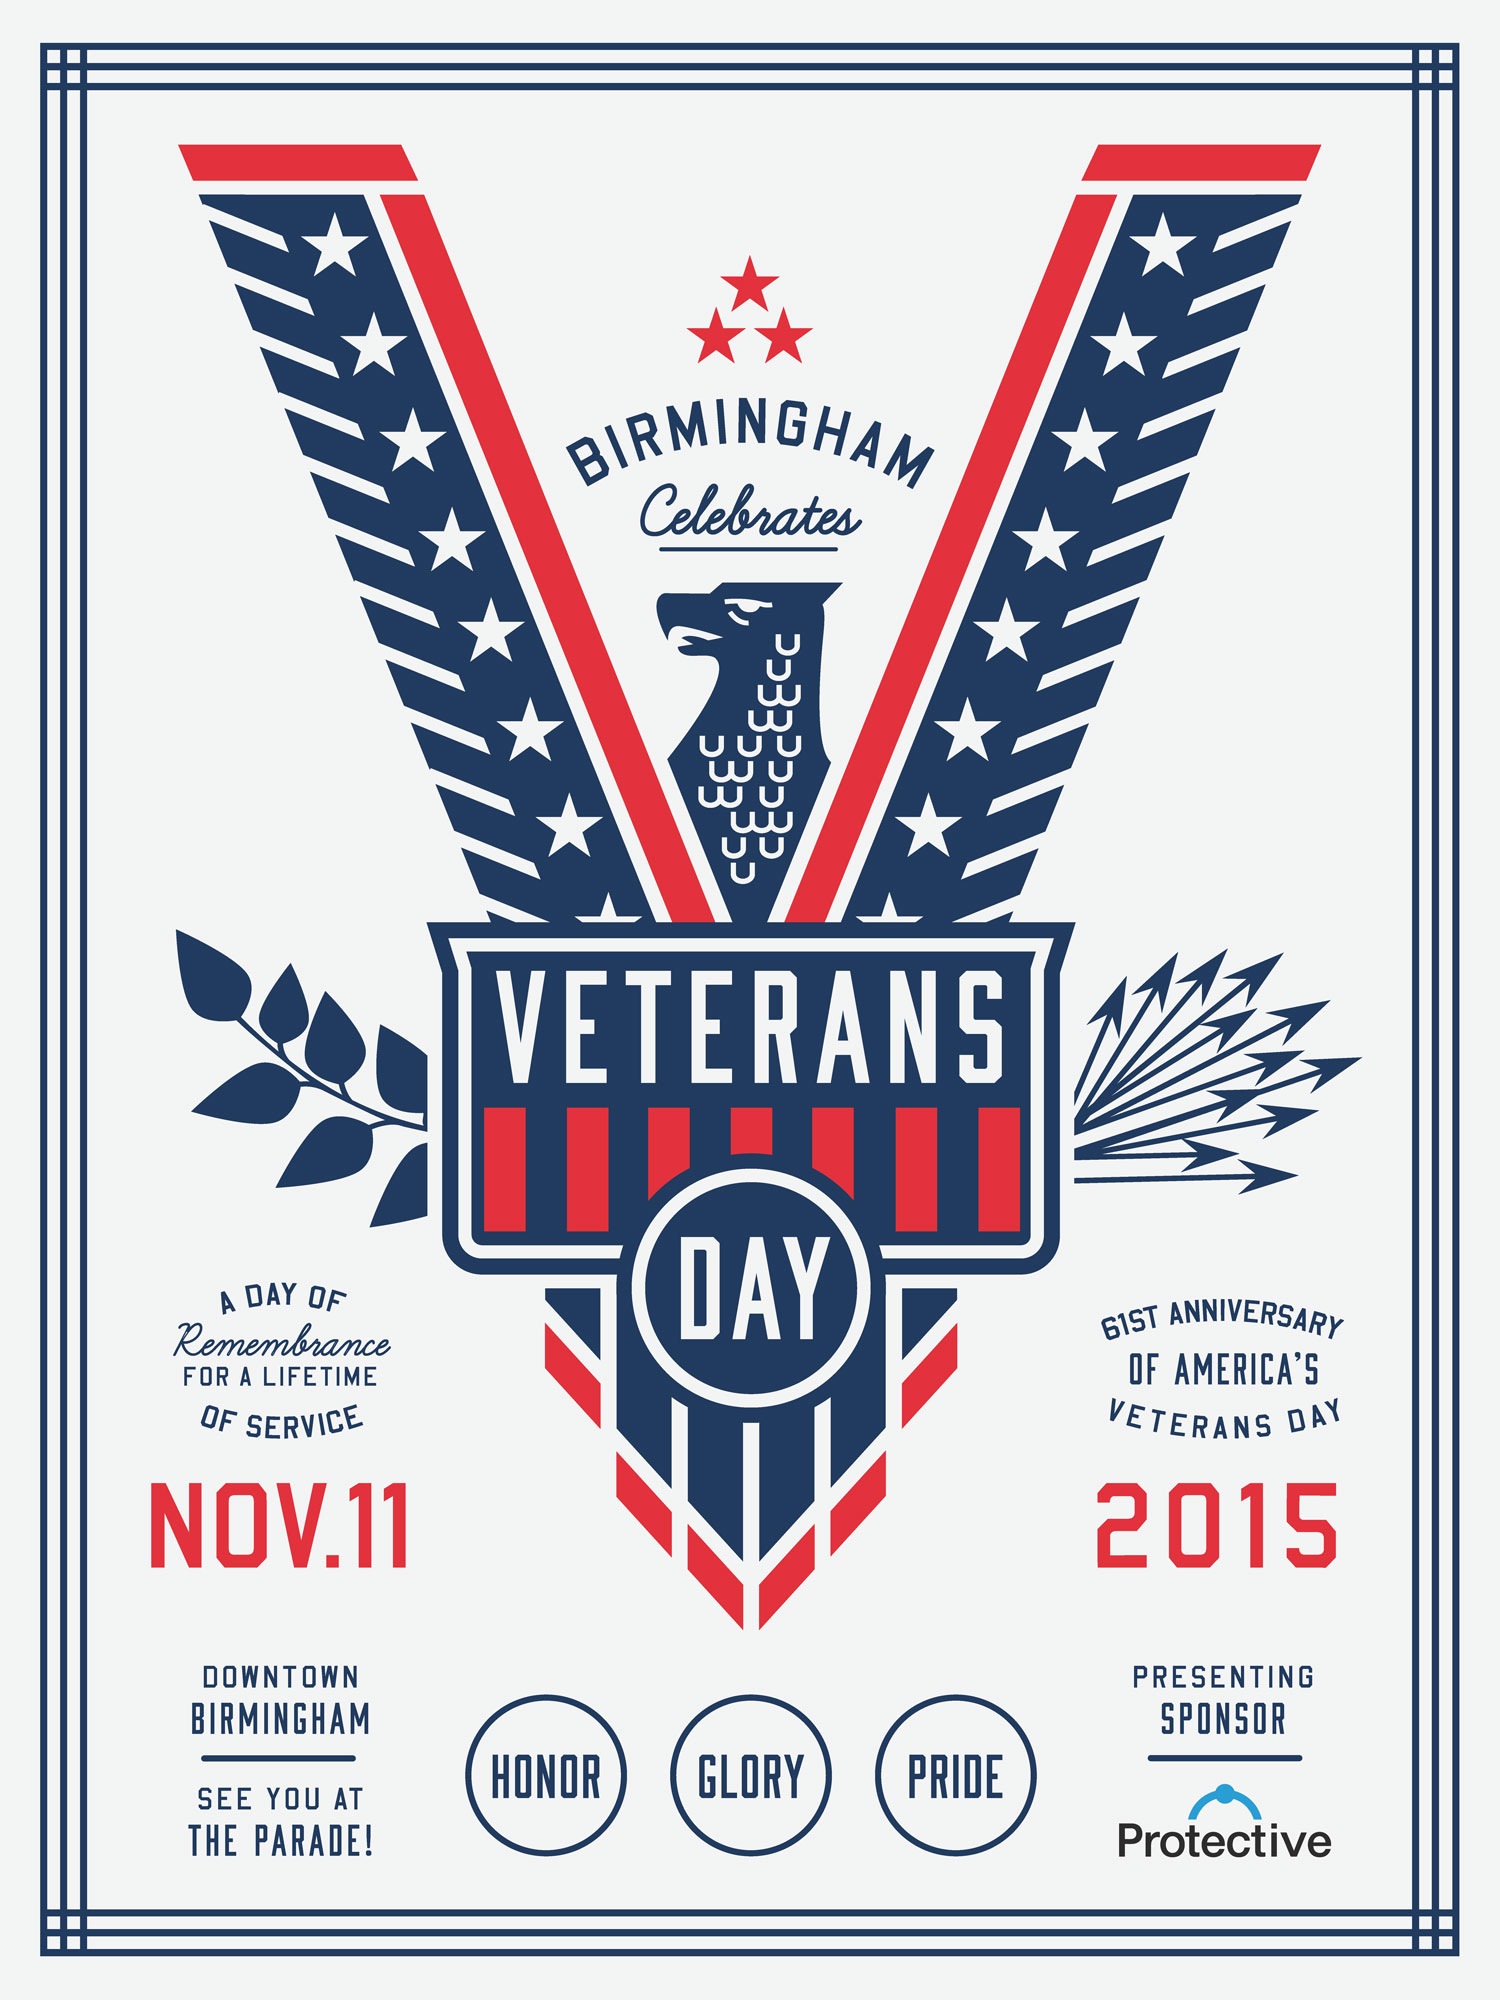 Birmingham Veterans Day Poster 2015